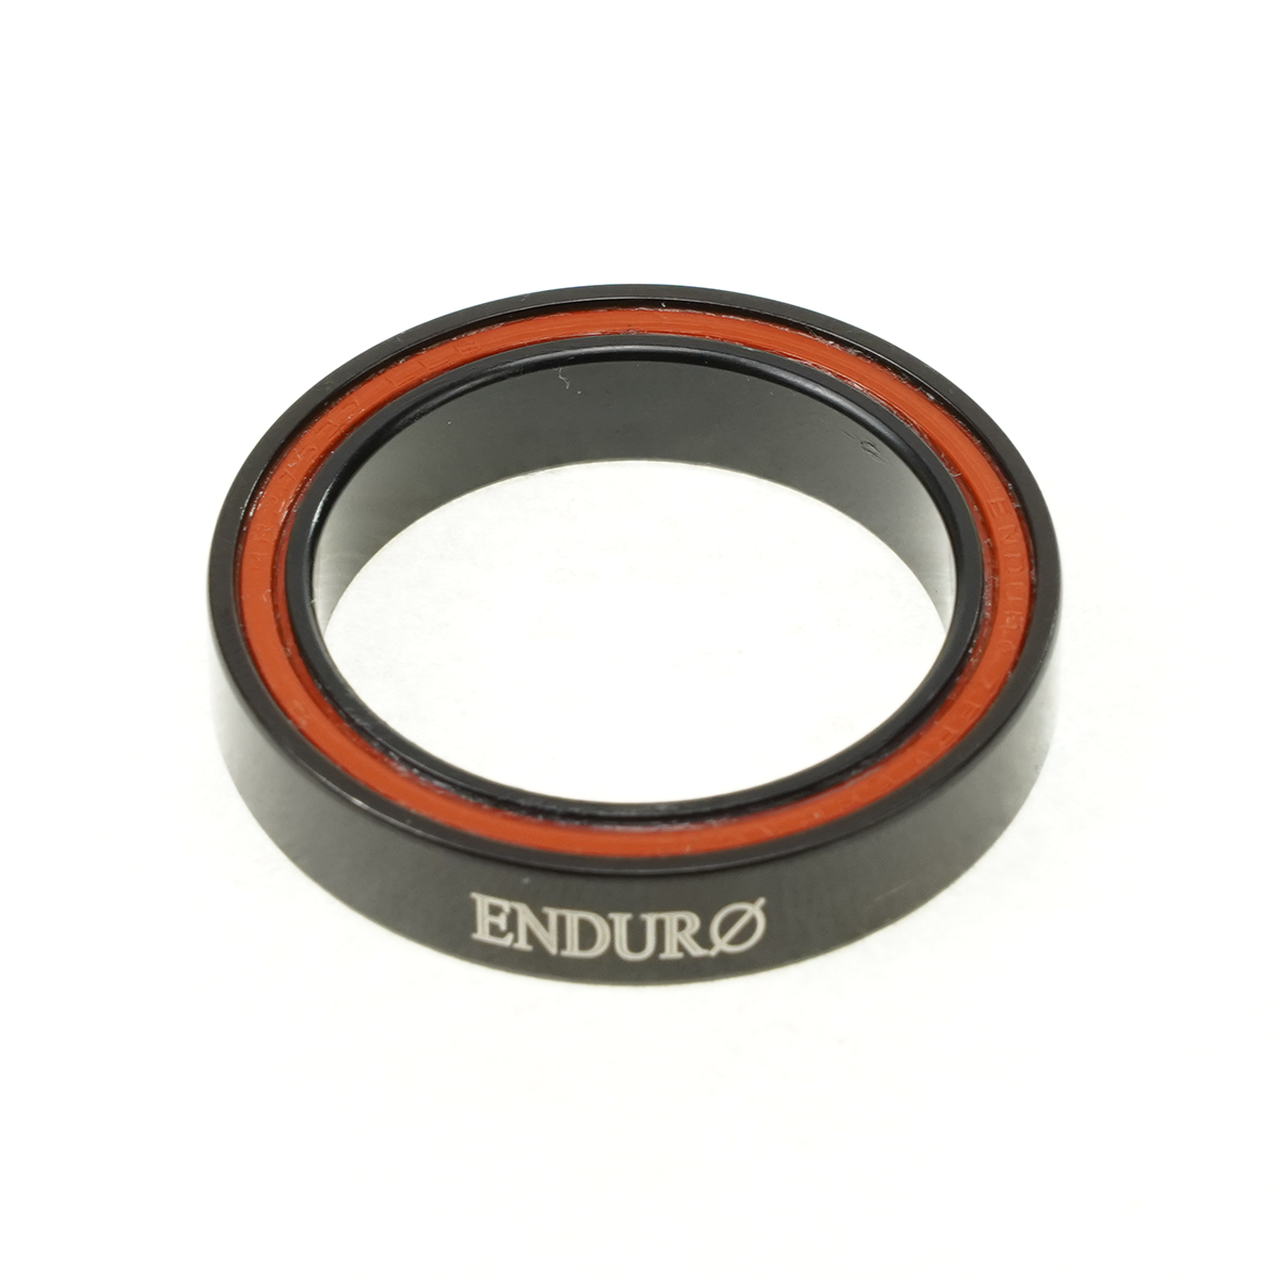 Enduro CO MR 27537 LLB - Enduro Zero, Black-Oxide, Ceramic Hybrid, ABEC-5, Radial Bearing (C3 Clearance) - 27.5mm x 37mm x 7mm